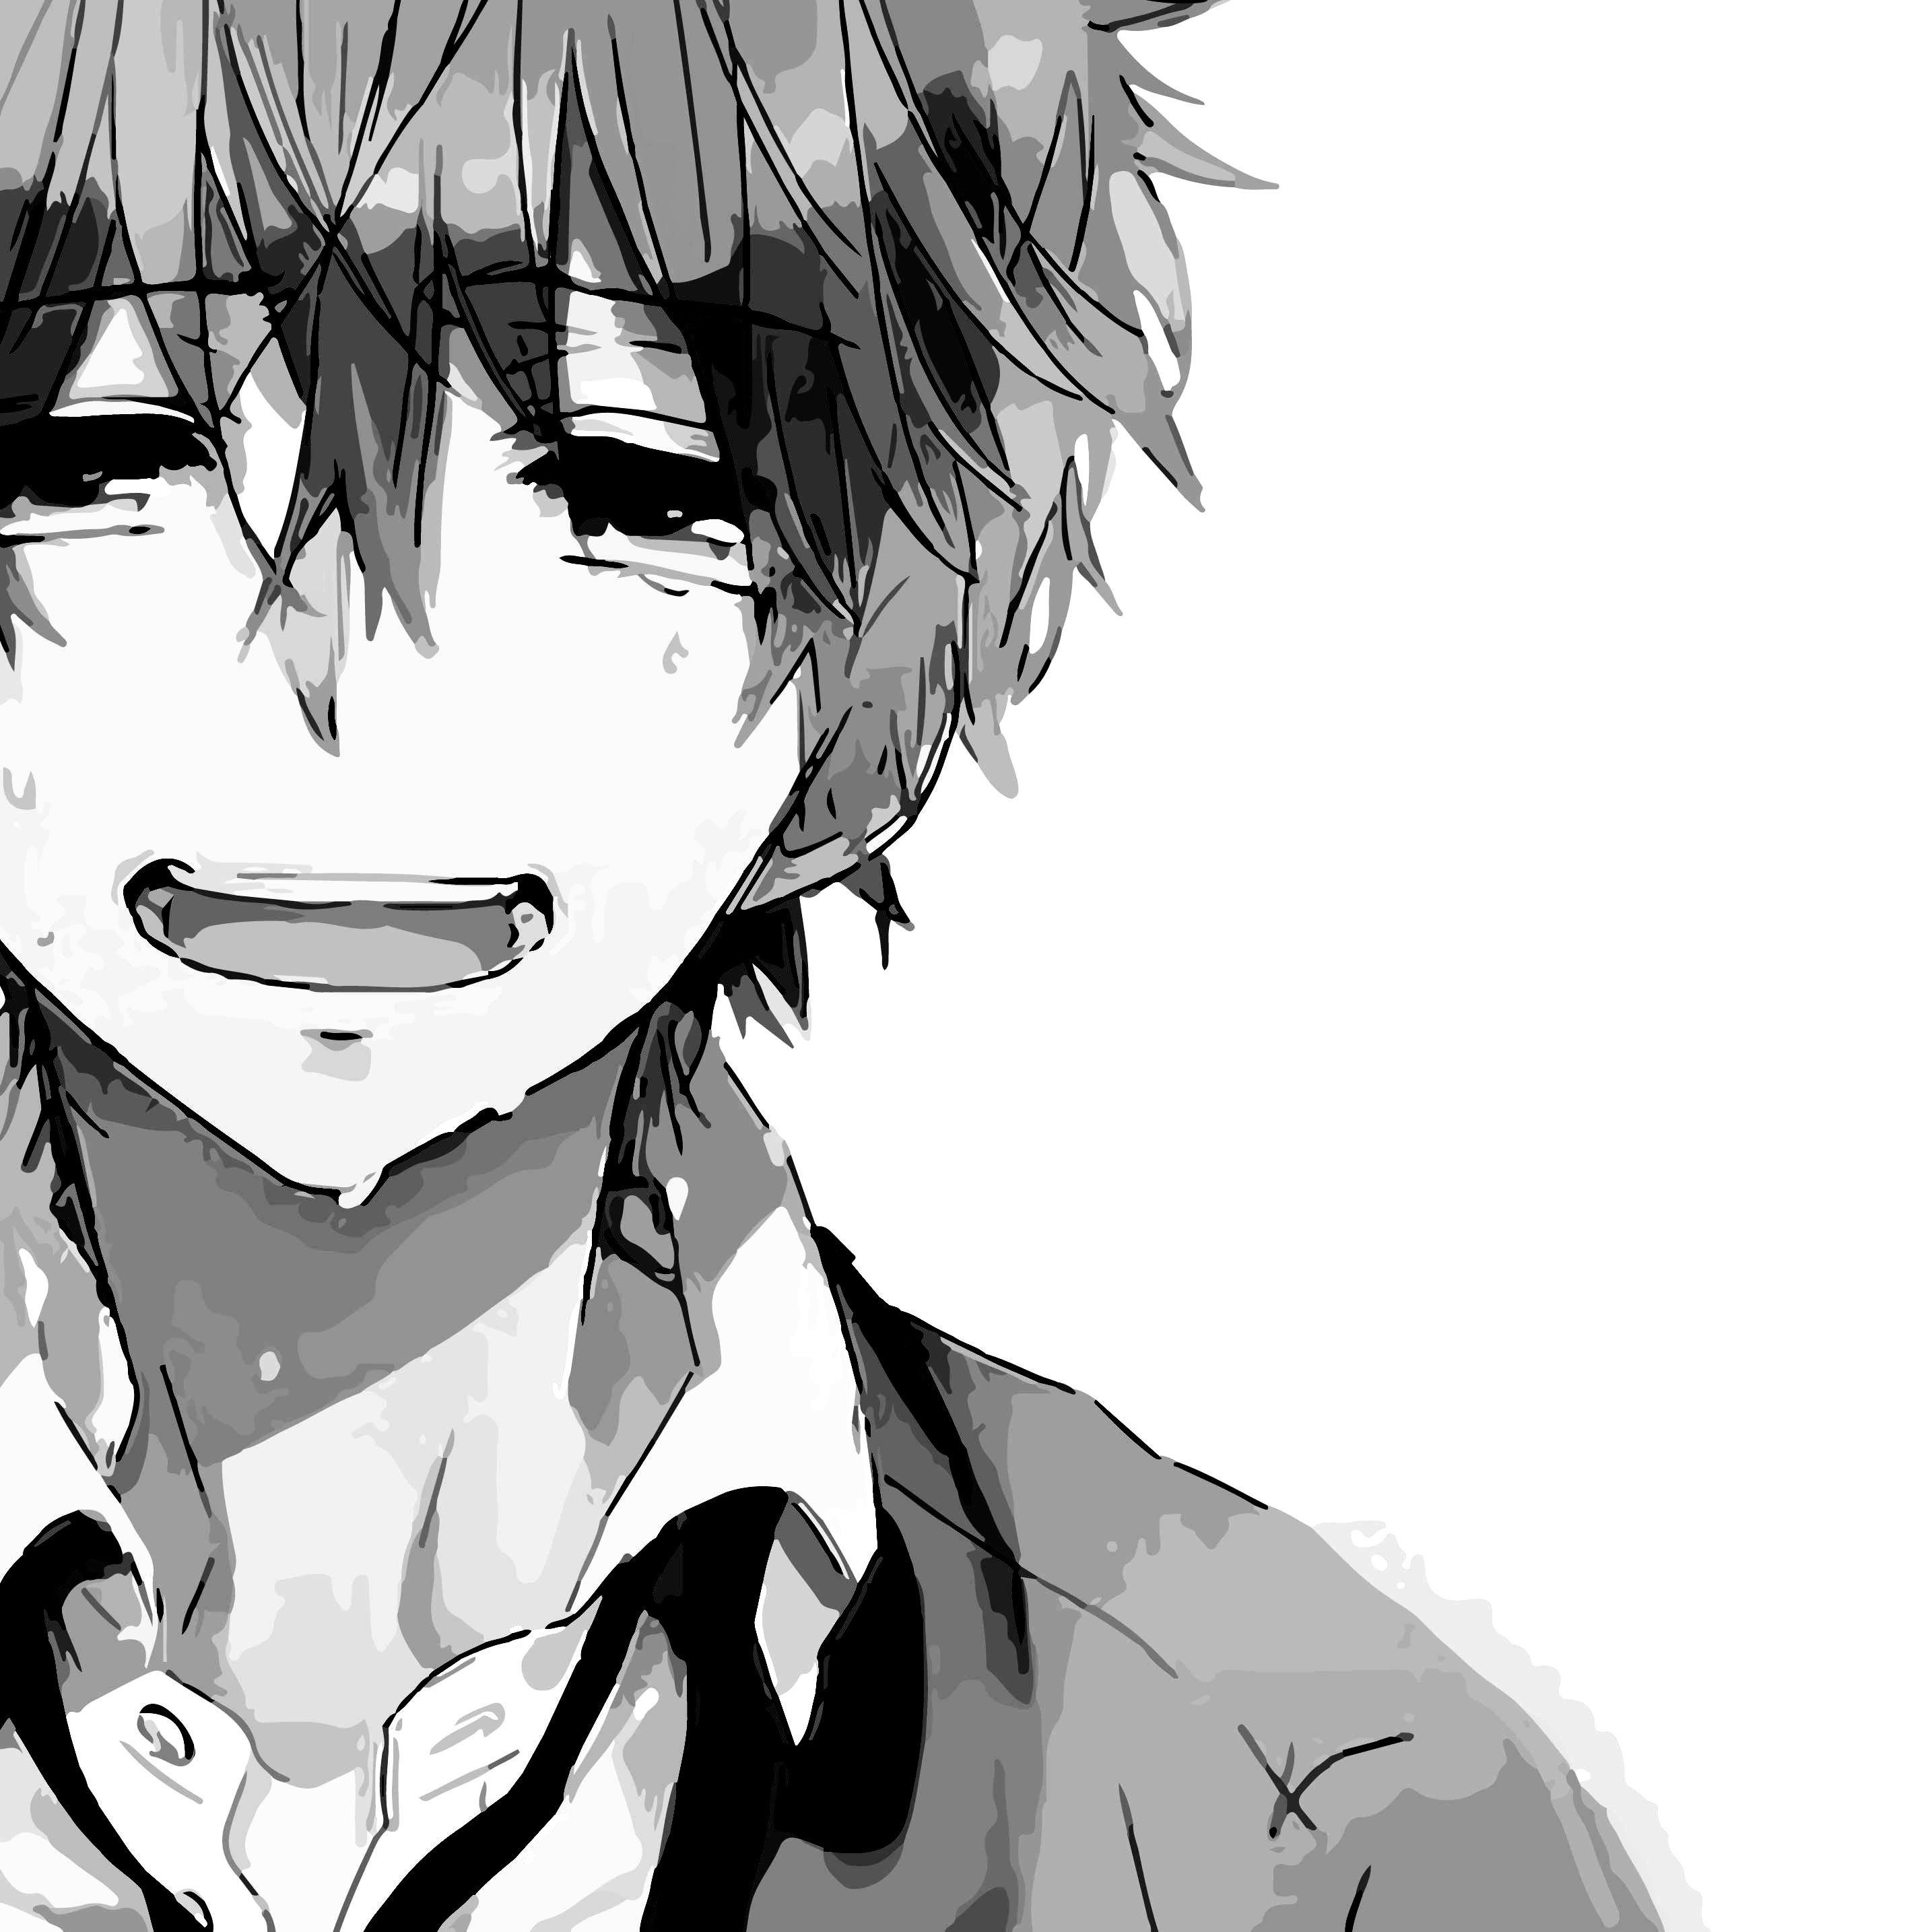 Lovely Sad Anime Boy Wallpaper HD